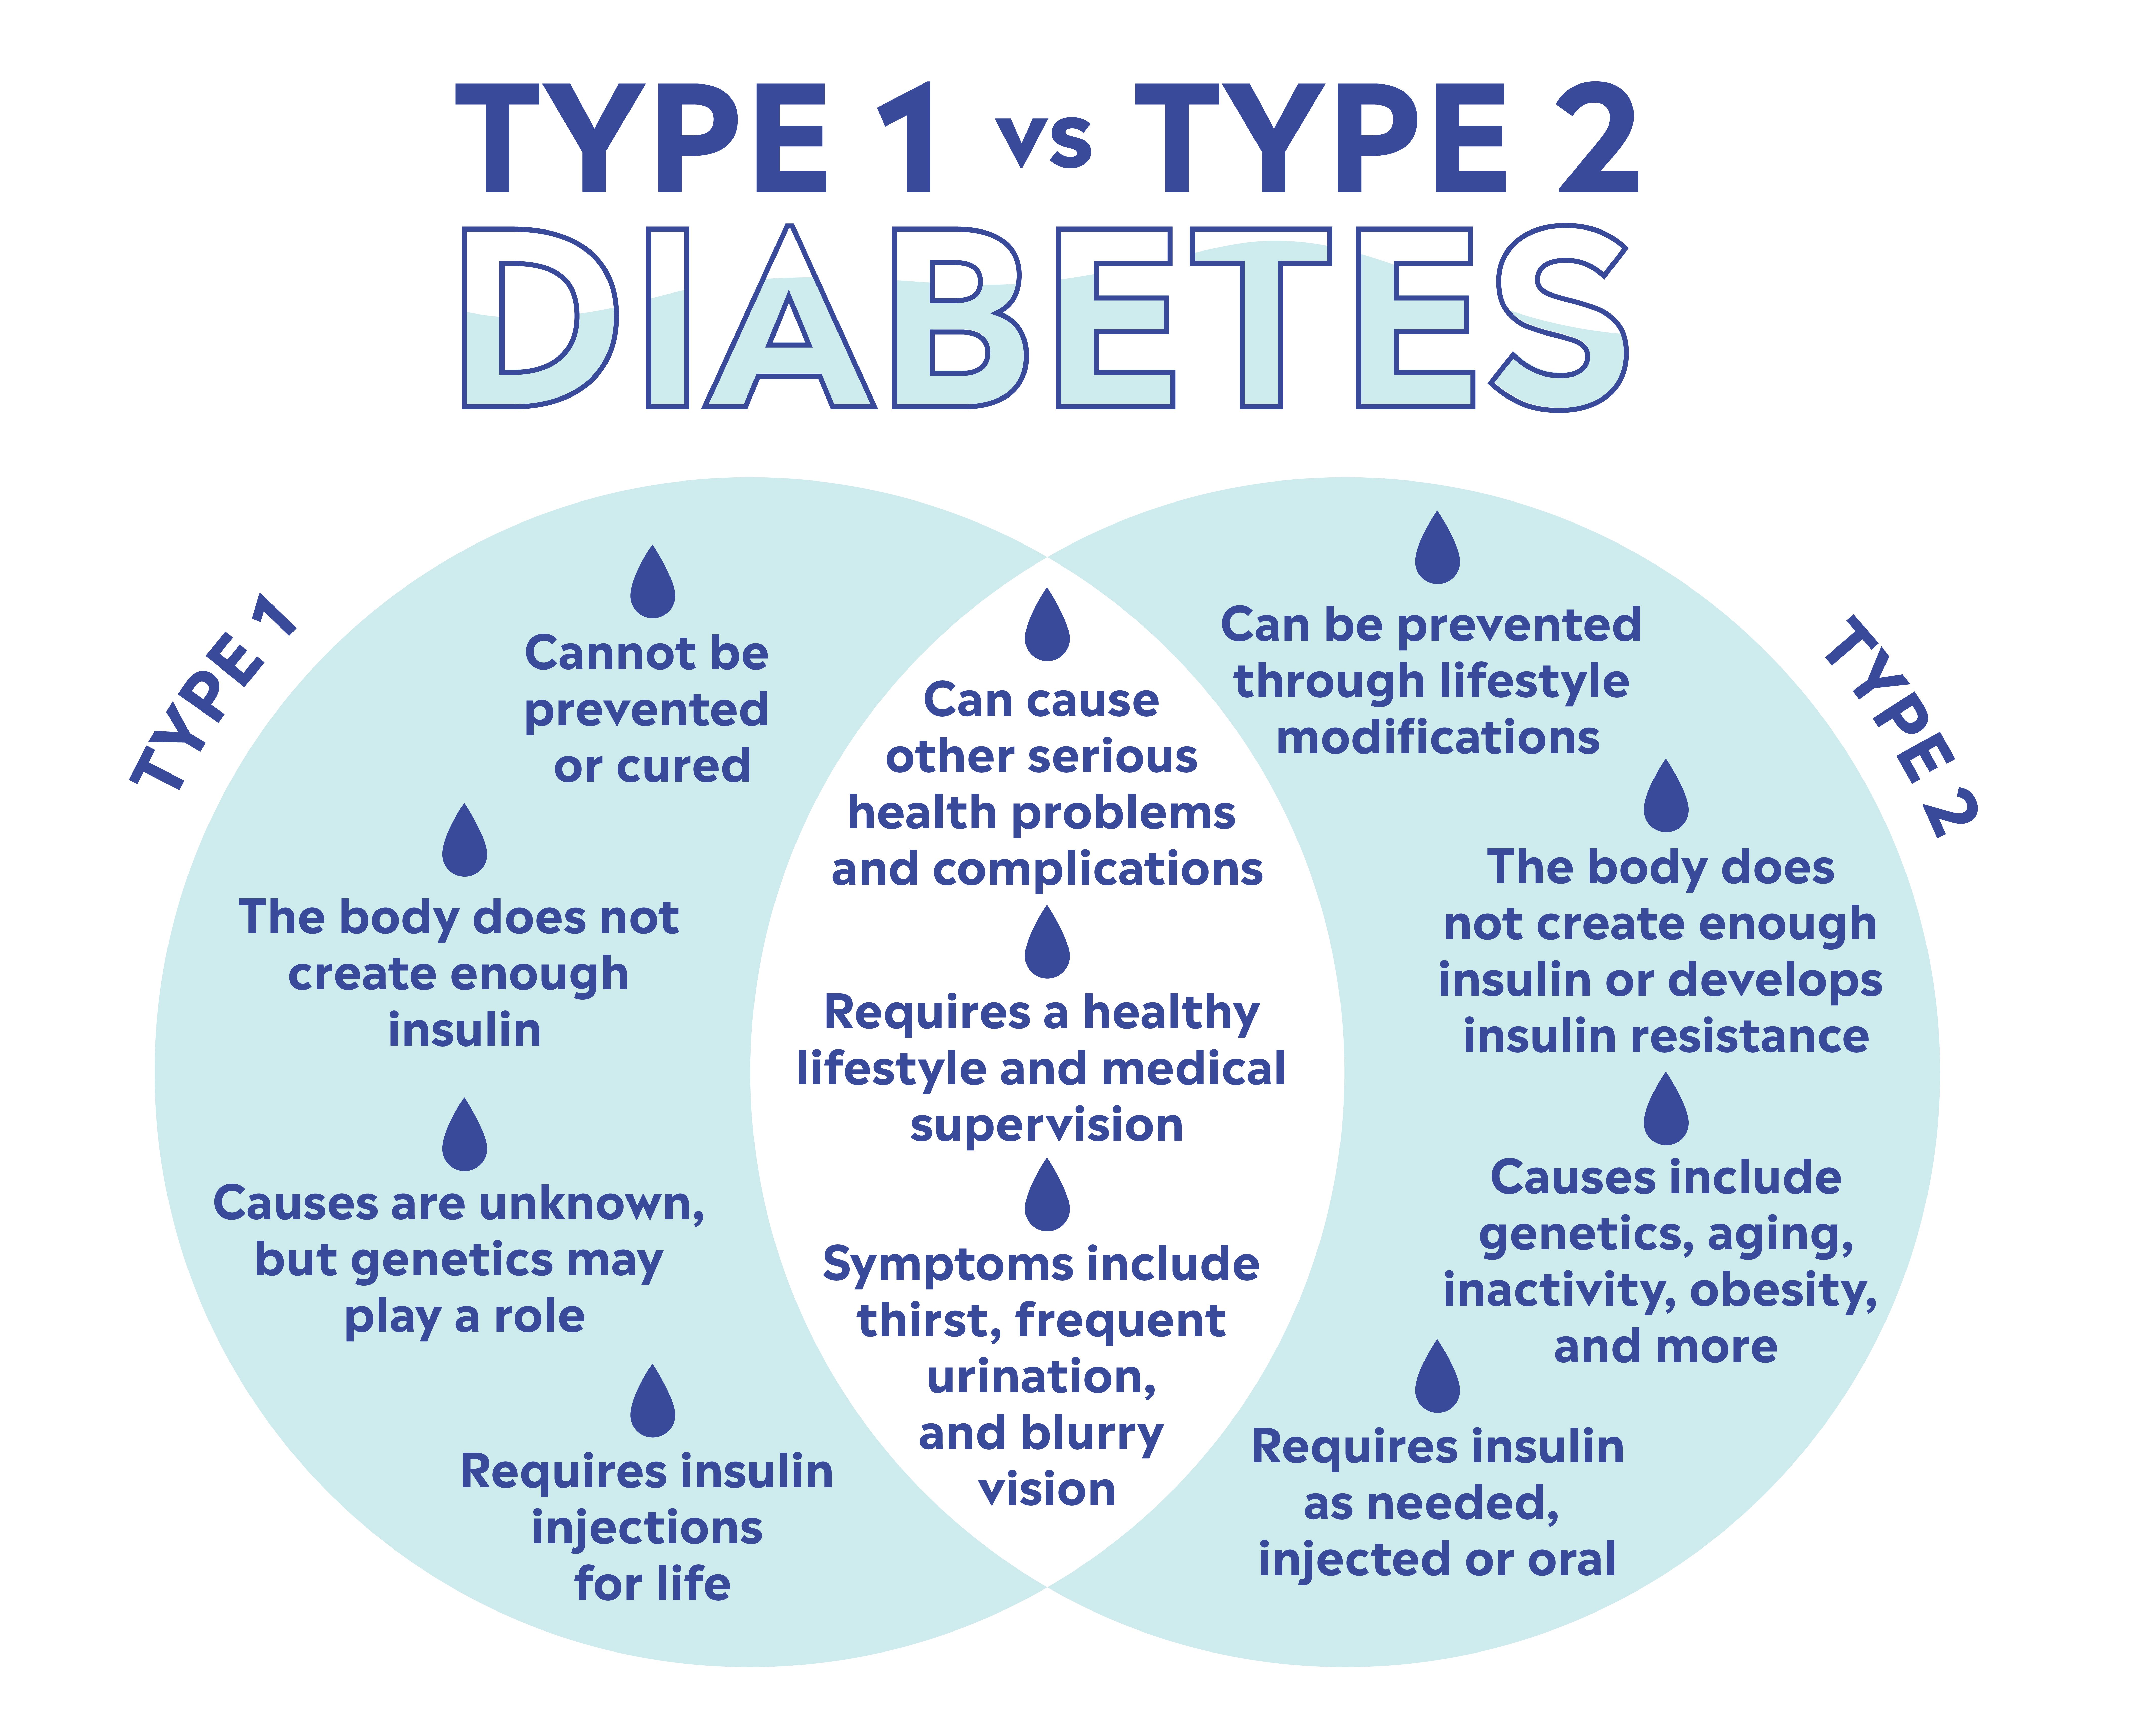 Type 2 Diabetes Symptoms, Treatments & Causes Explained by Doctors